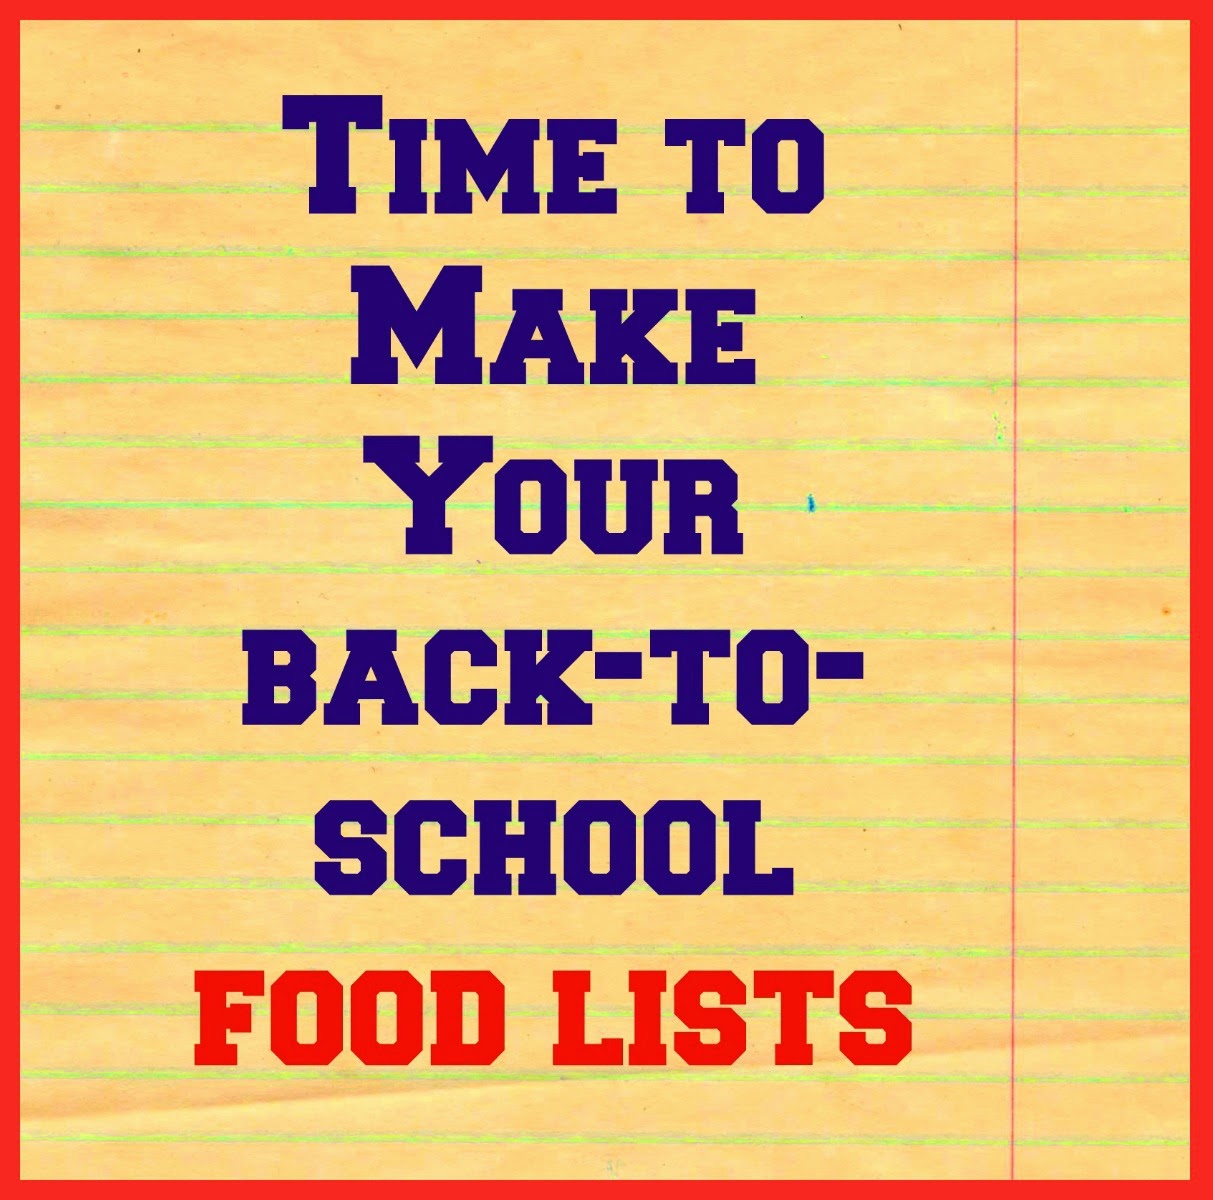 Back-to-school food lists